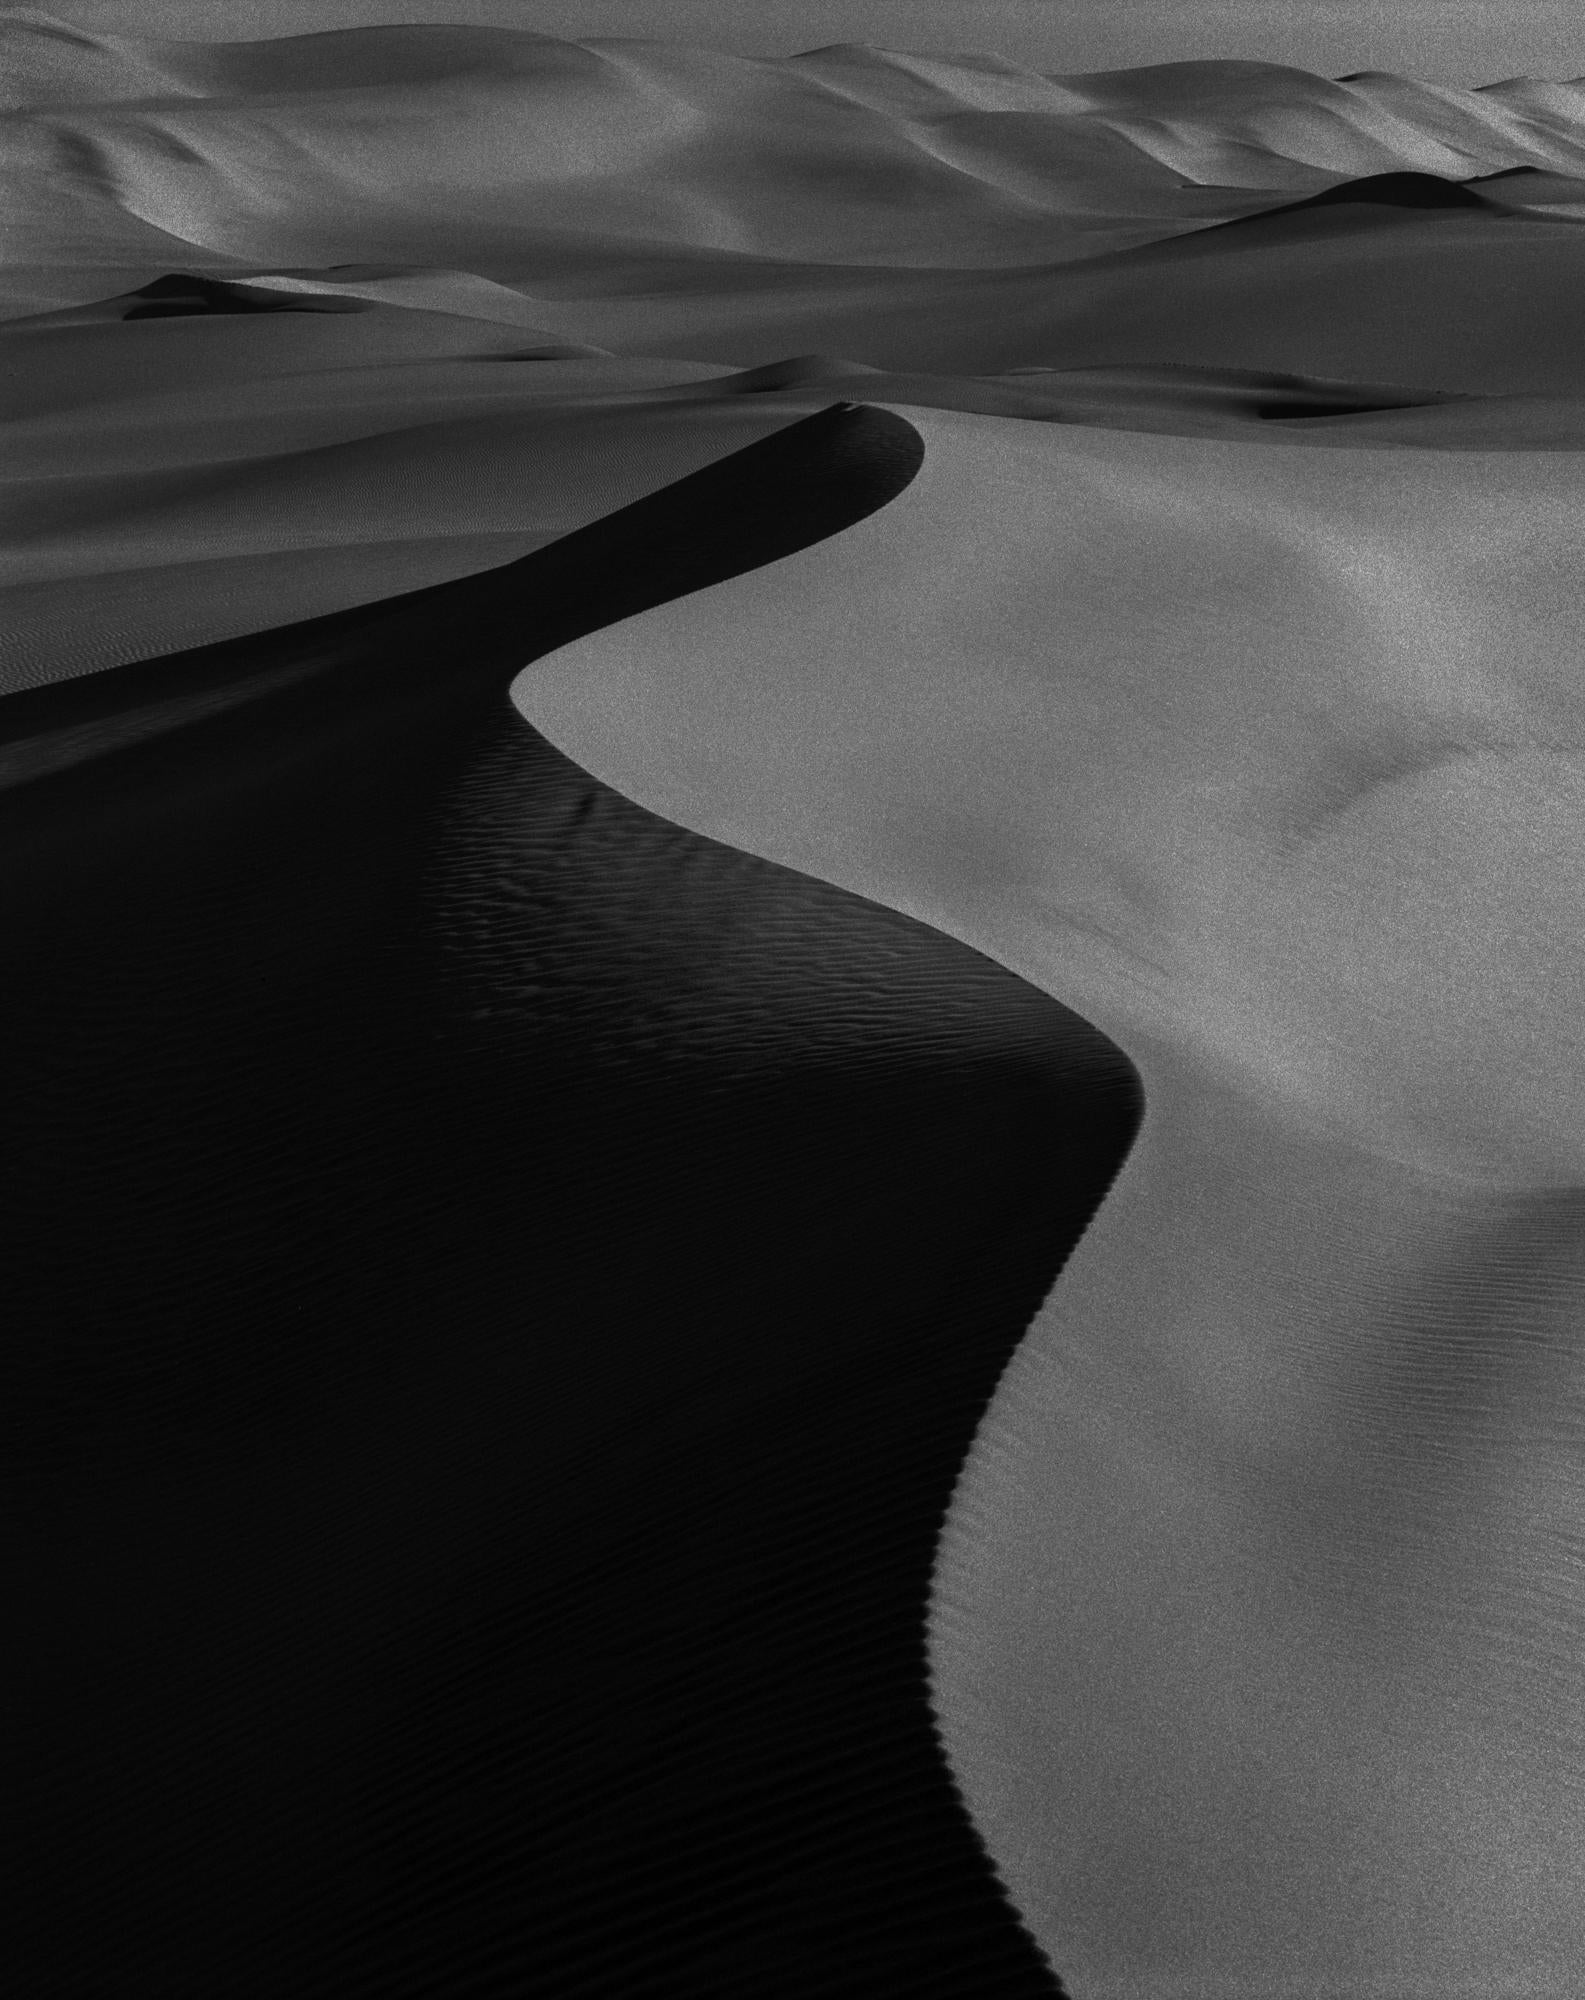  Dunes, Namibia - Photograph by Kurt Markus